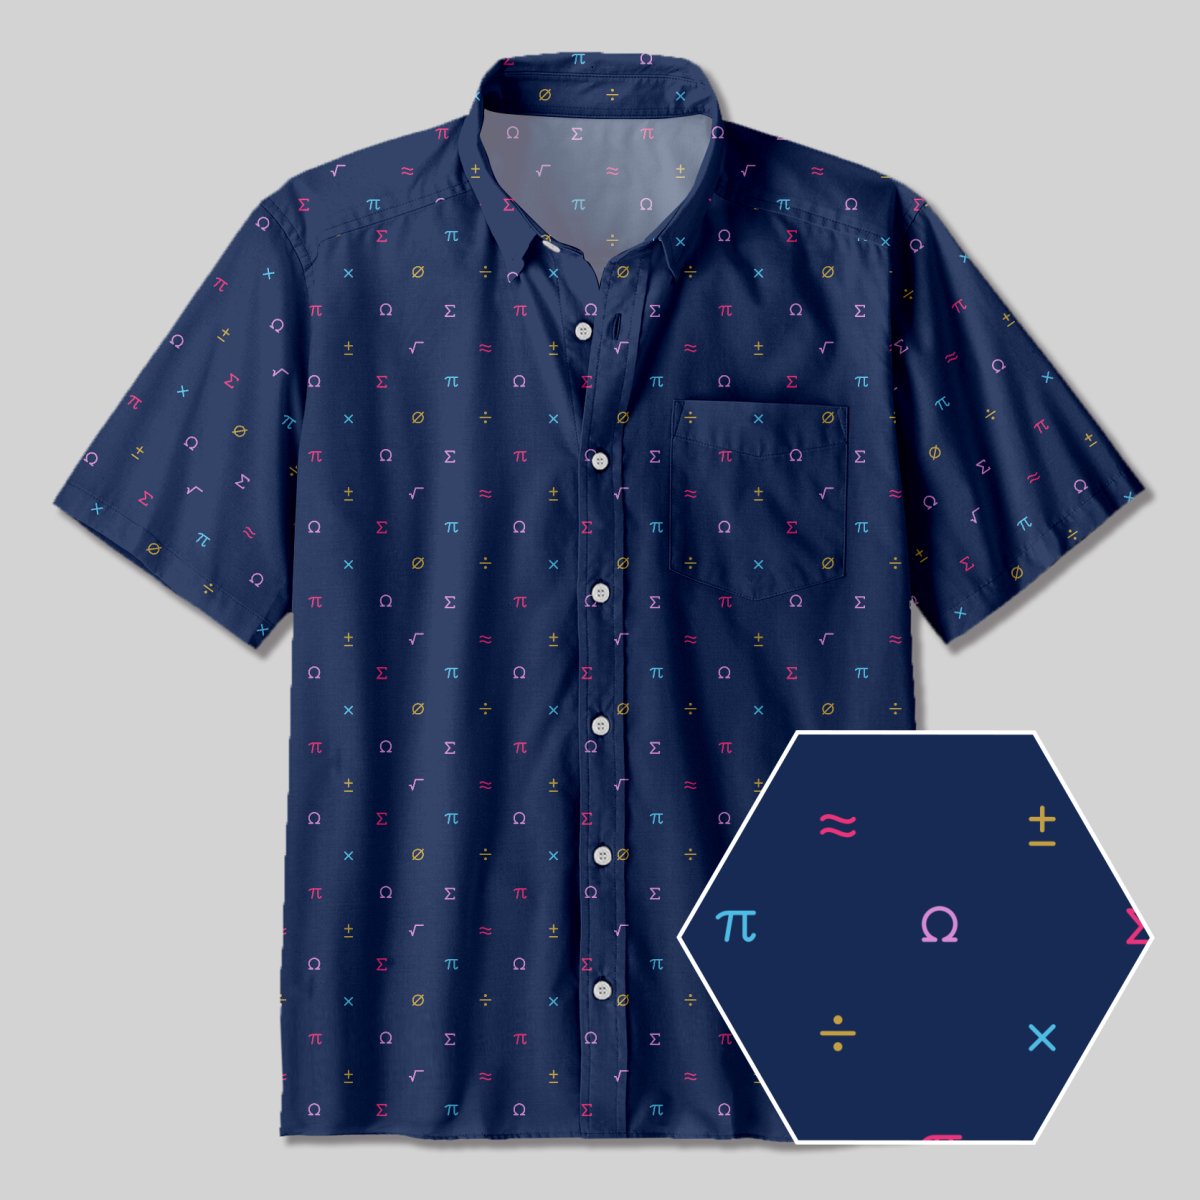 Mathematics Symbol Button Up Pocket Shirt - Geeksoutfit